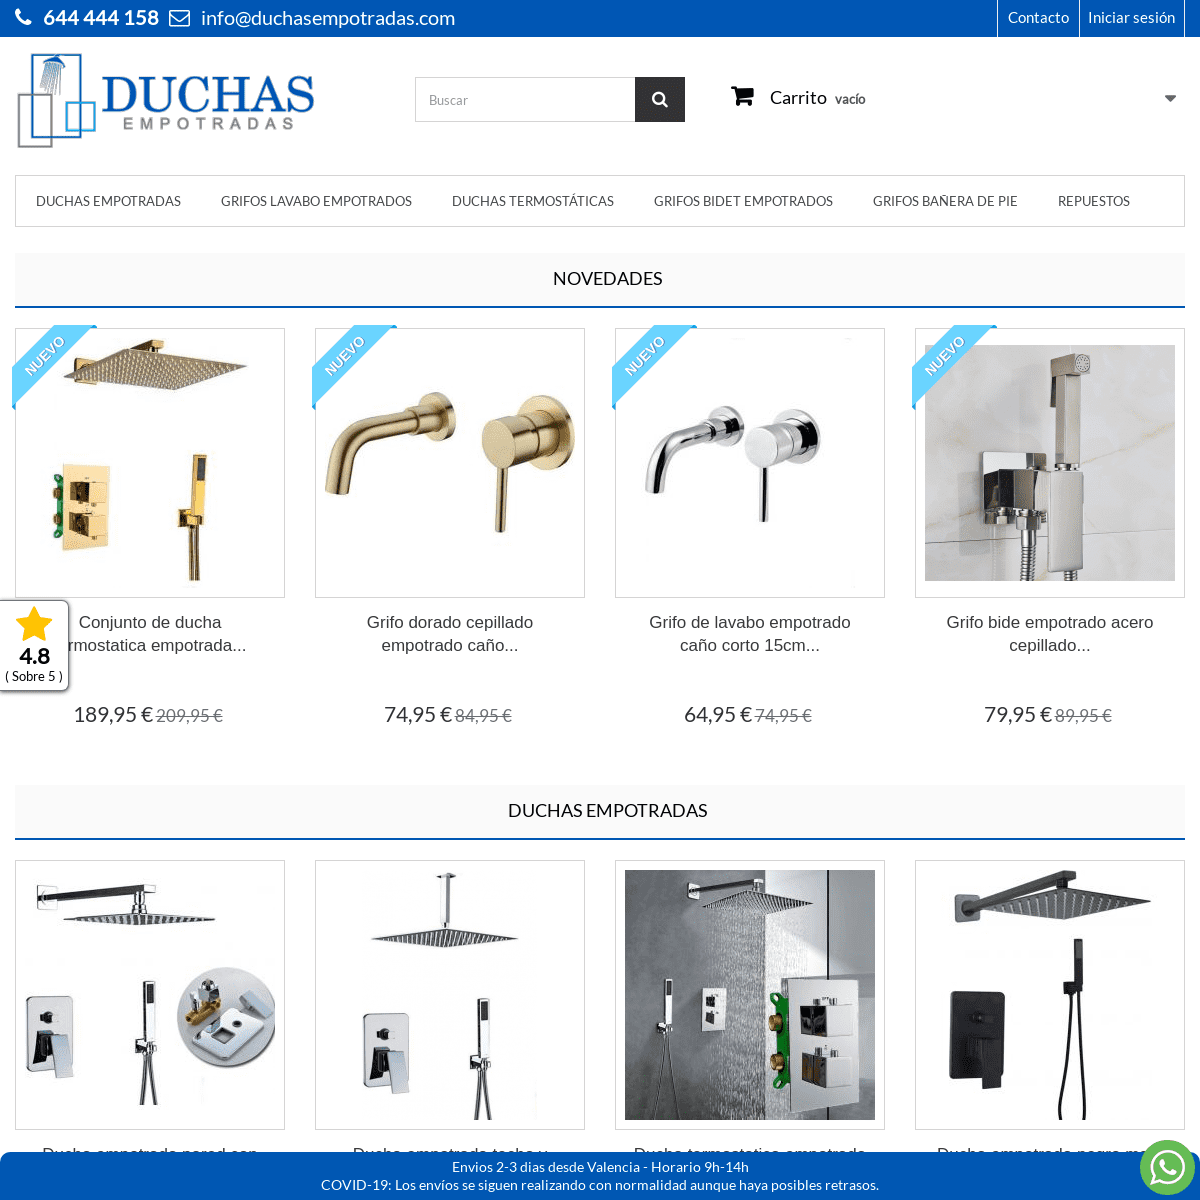 A complete backup of duchasempotradas.com